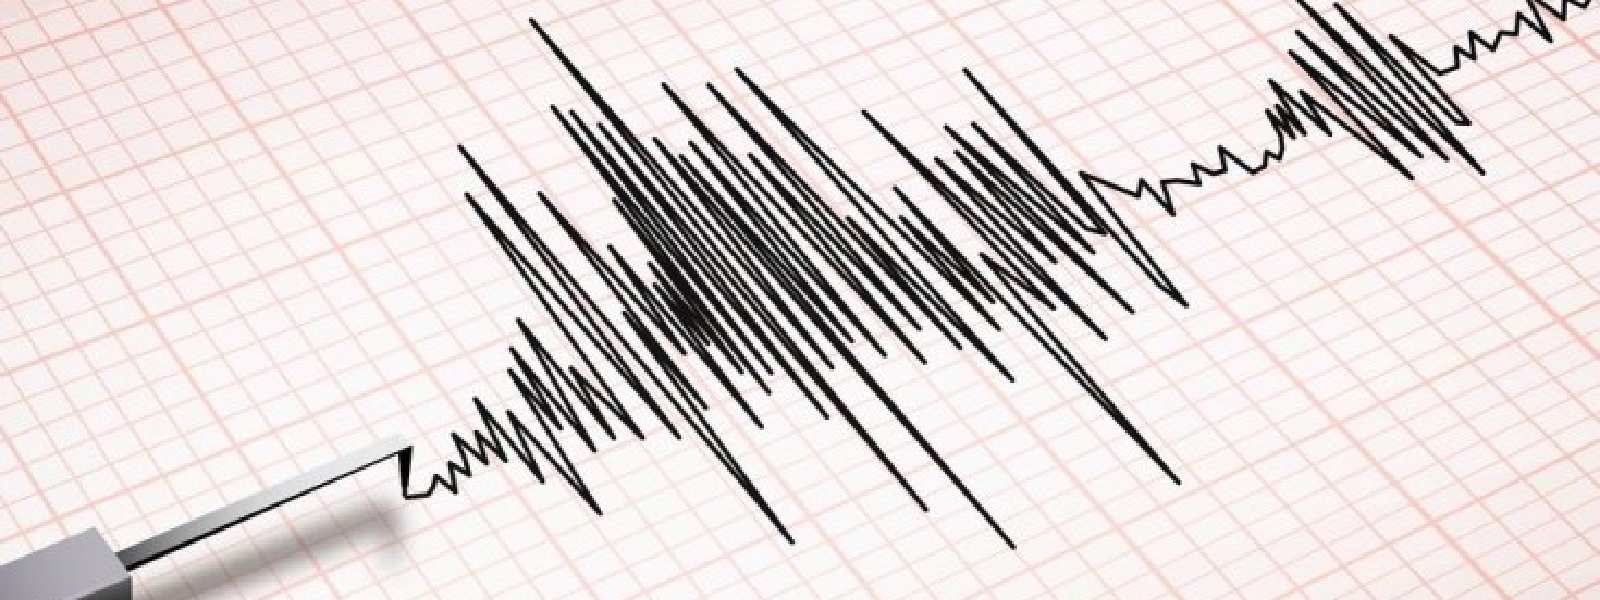 Four Tremors Along Mid-Indian Ridge; No SL Impact